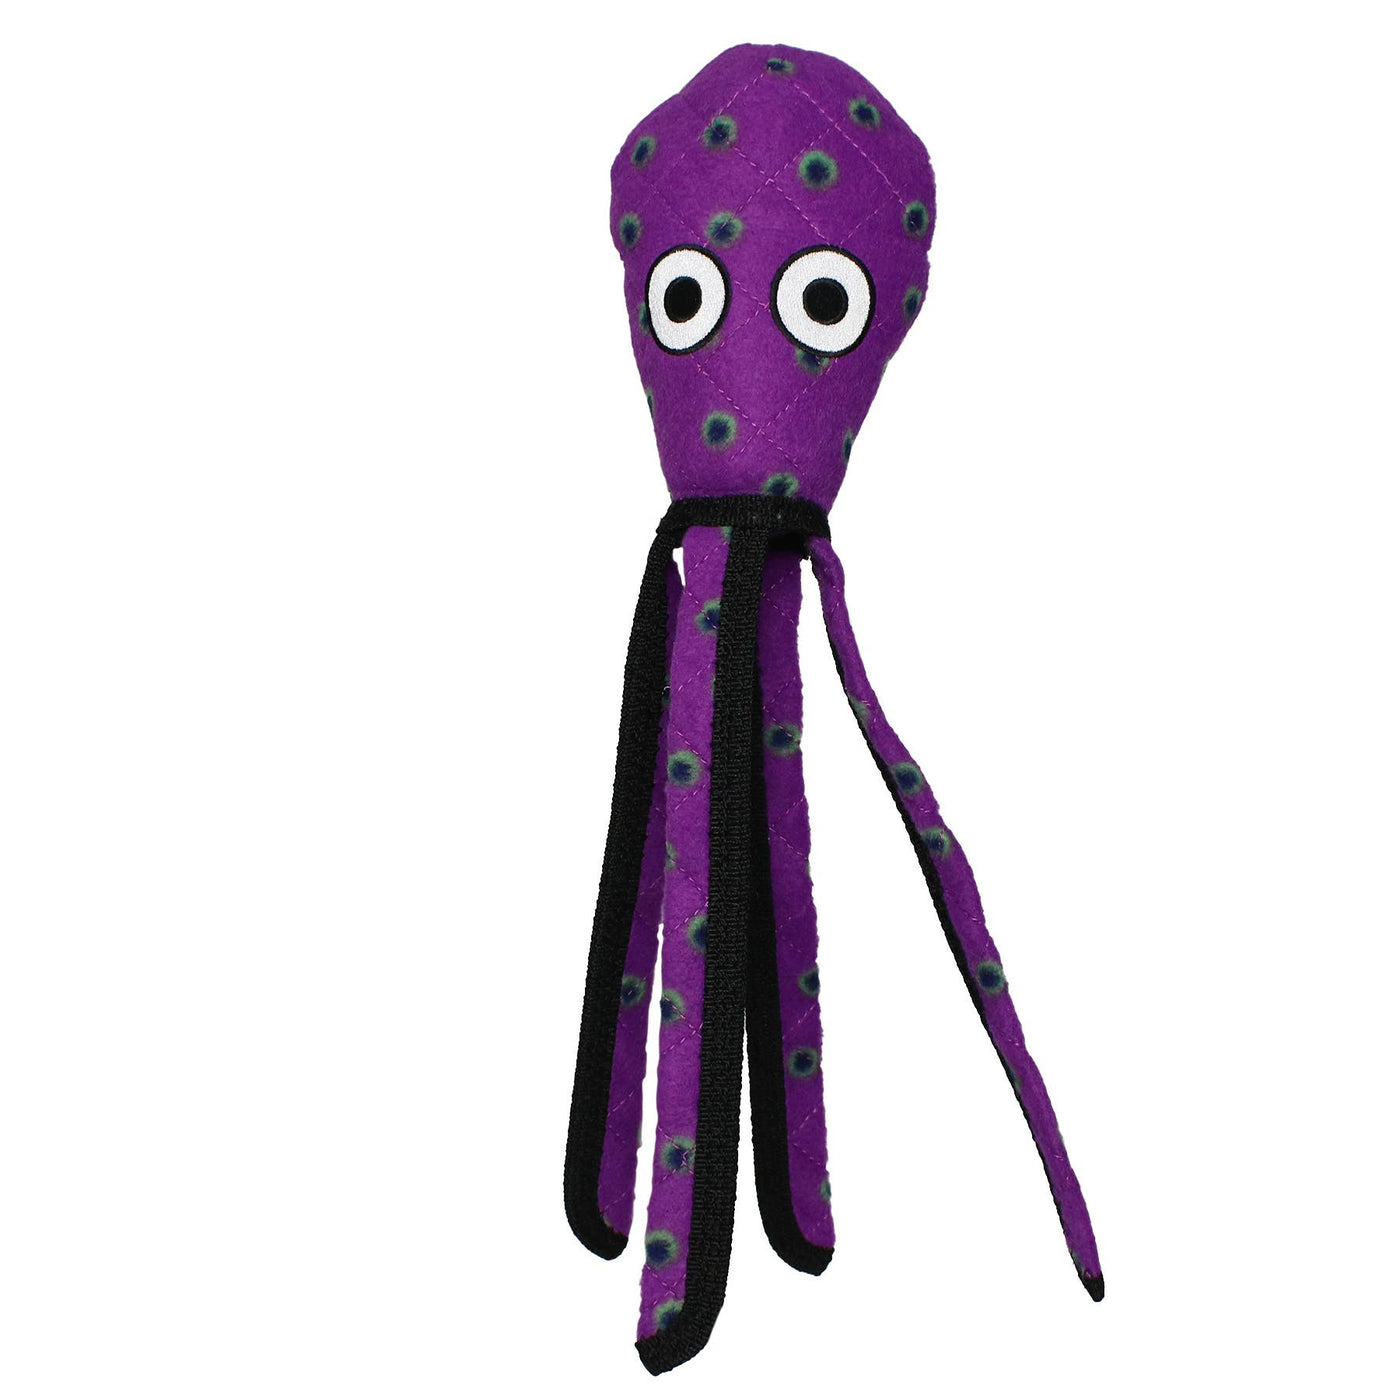 Tuffy Ocean Squid - Purple, Durable, Tough, Squeaky Dog Toy